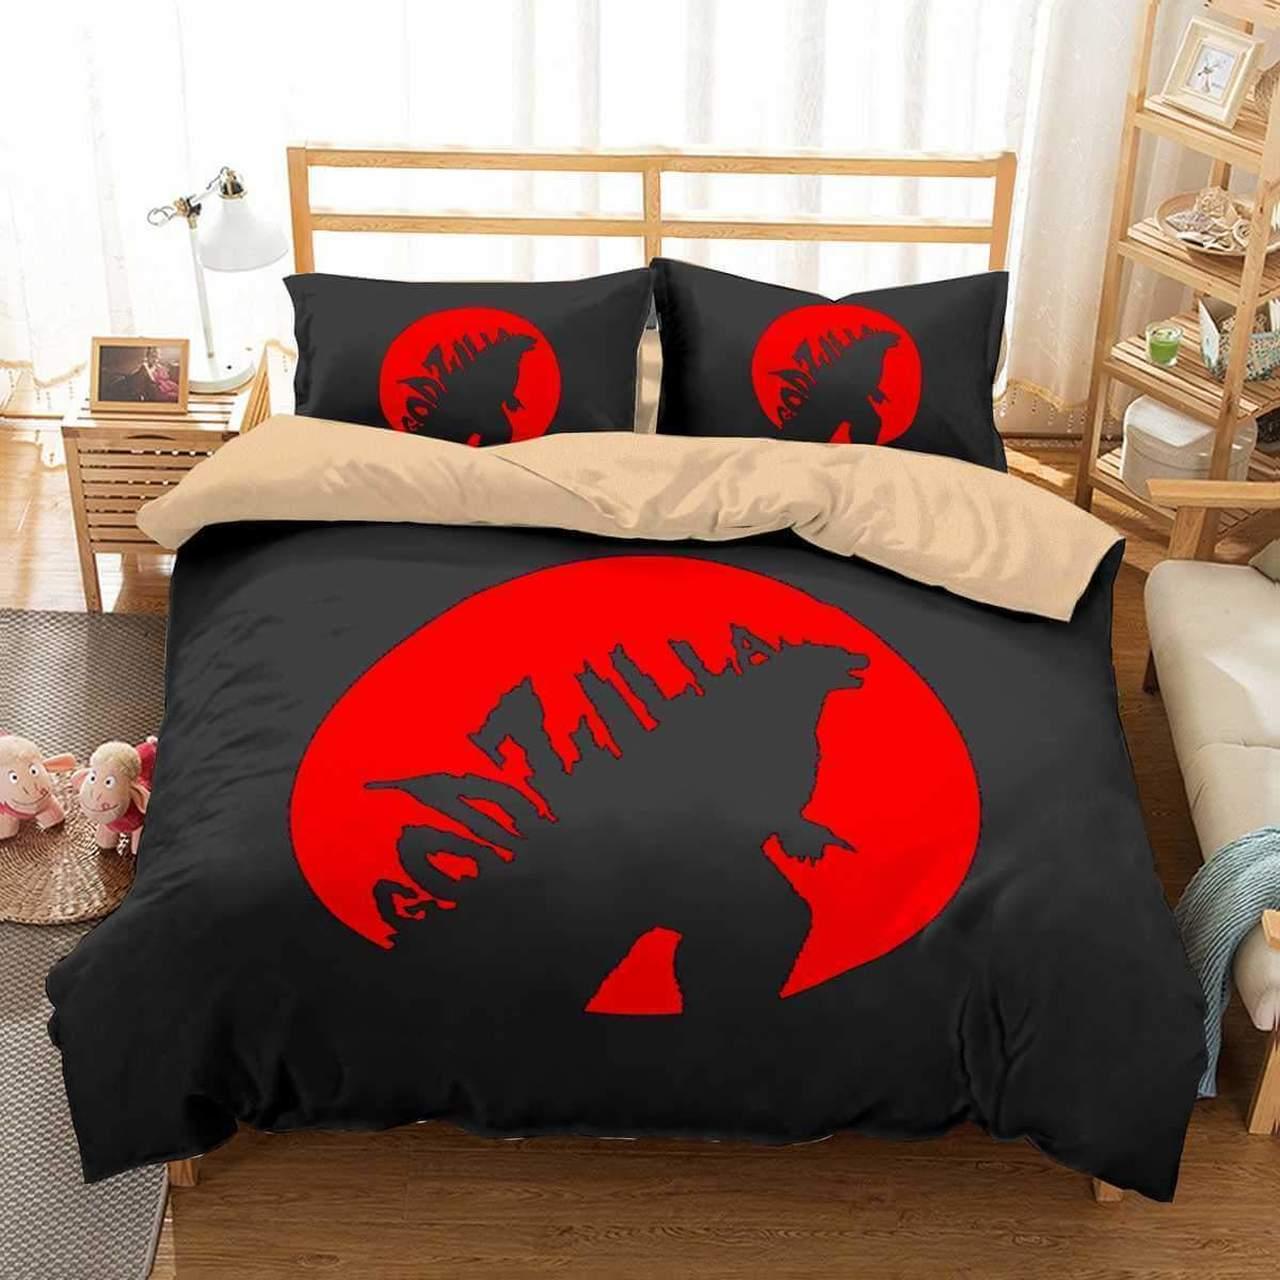 Red And Black Style Godzilla Bedding Set